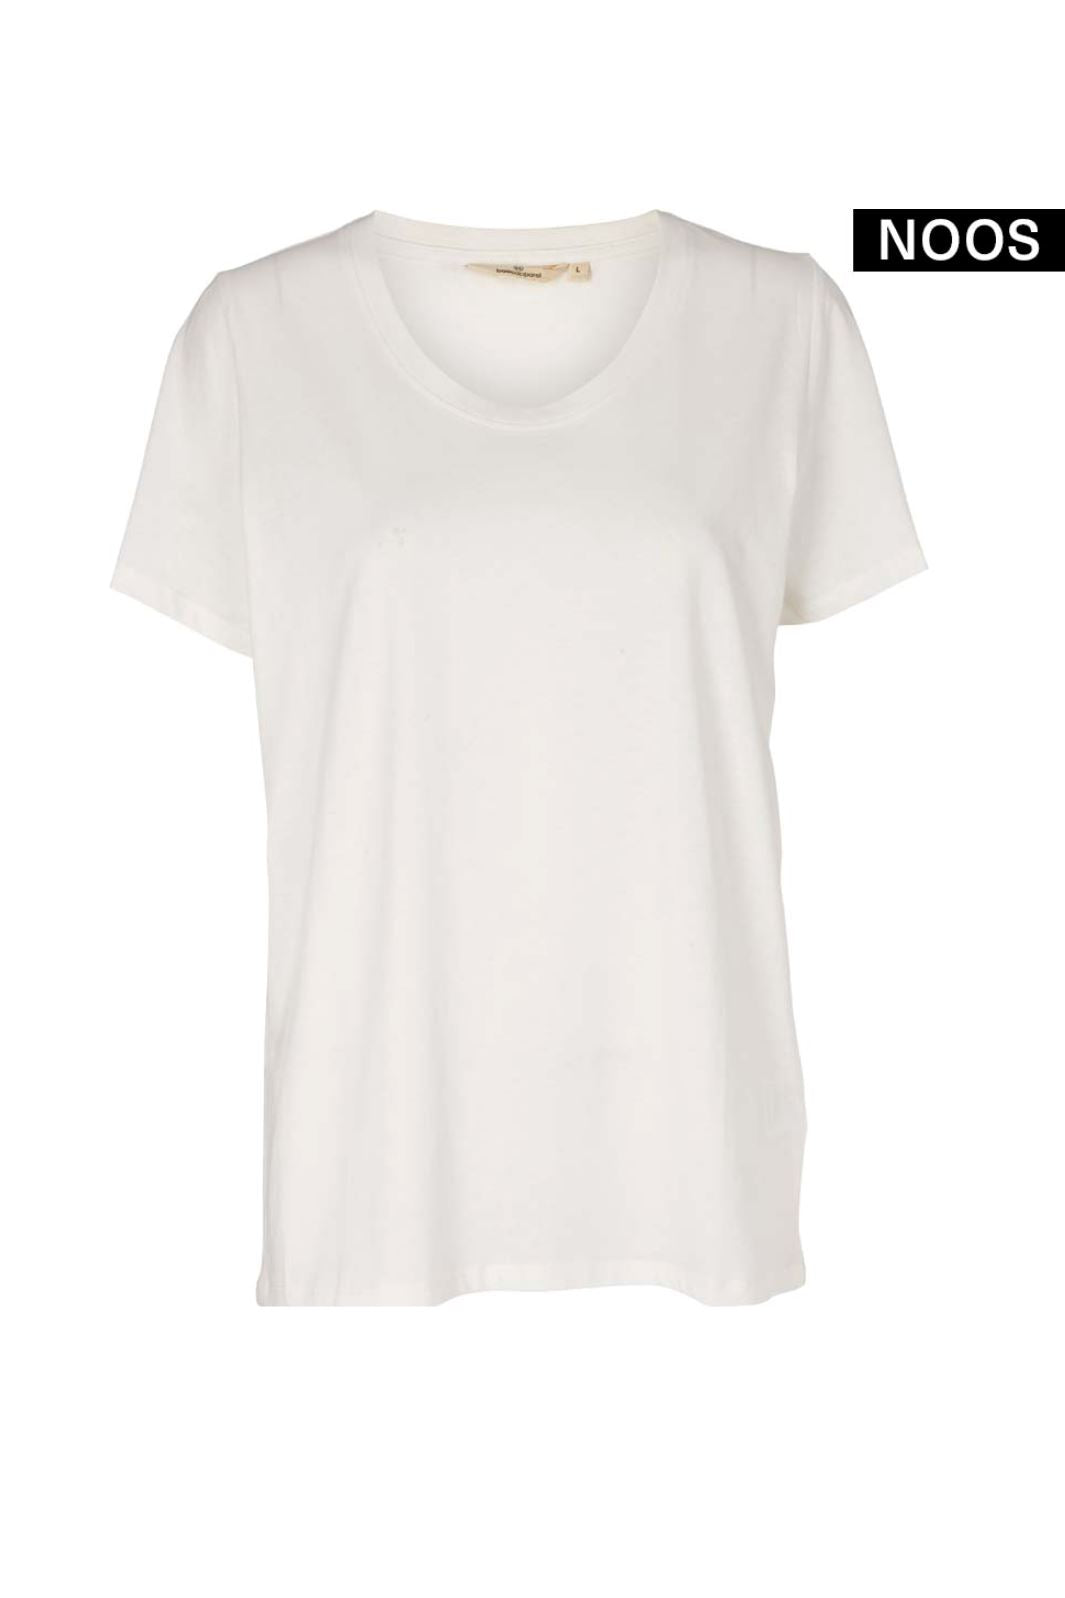 Basic Apparel - Rebekka Tee GOTS - 002 White T-shirts 